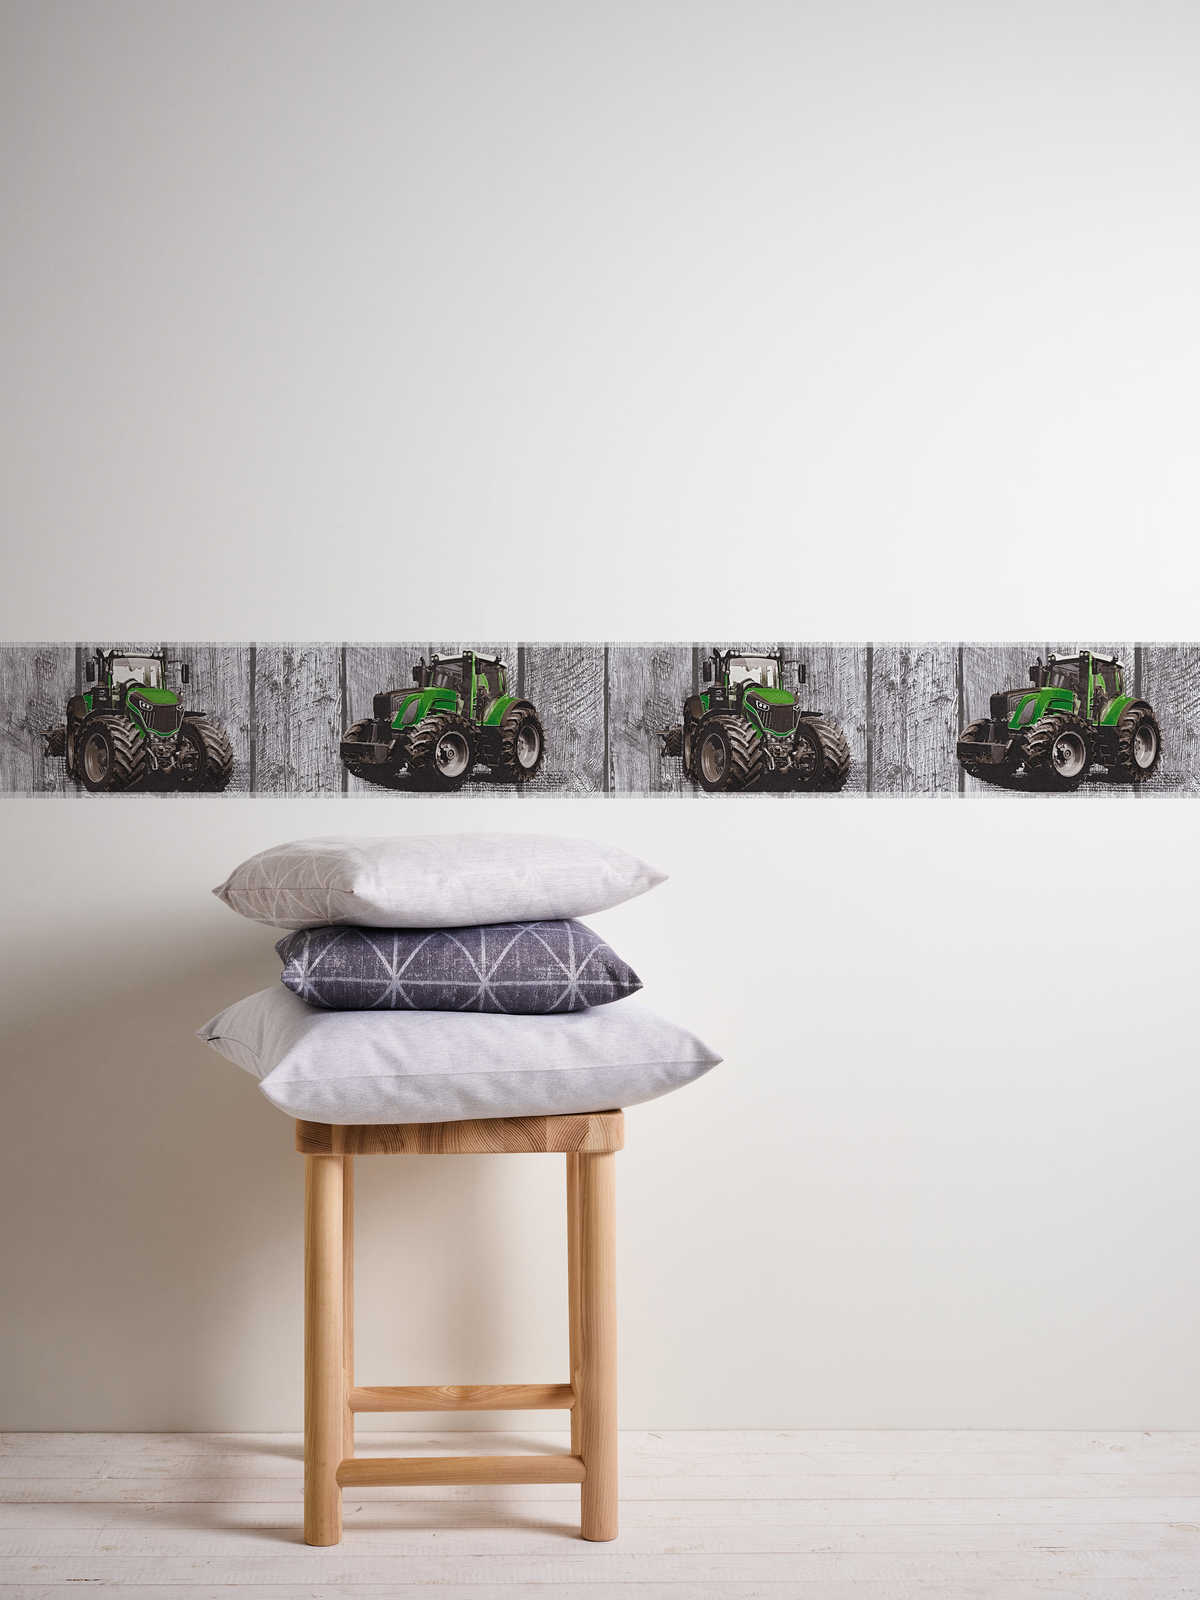             Tractor wallpaper border for Nursery - grey, green
        